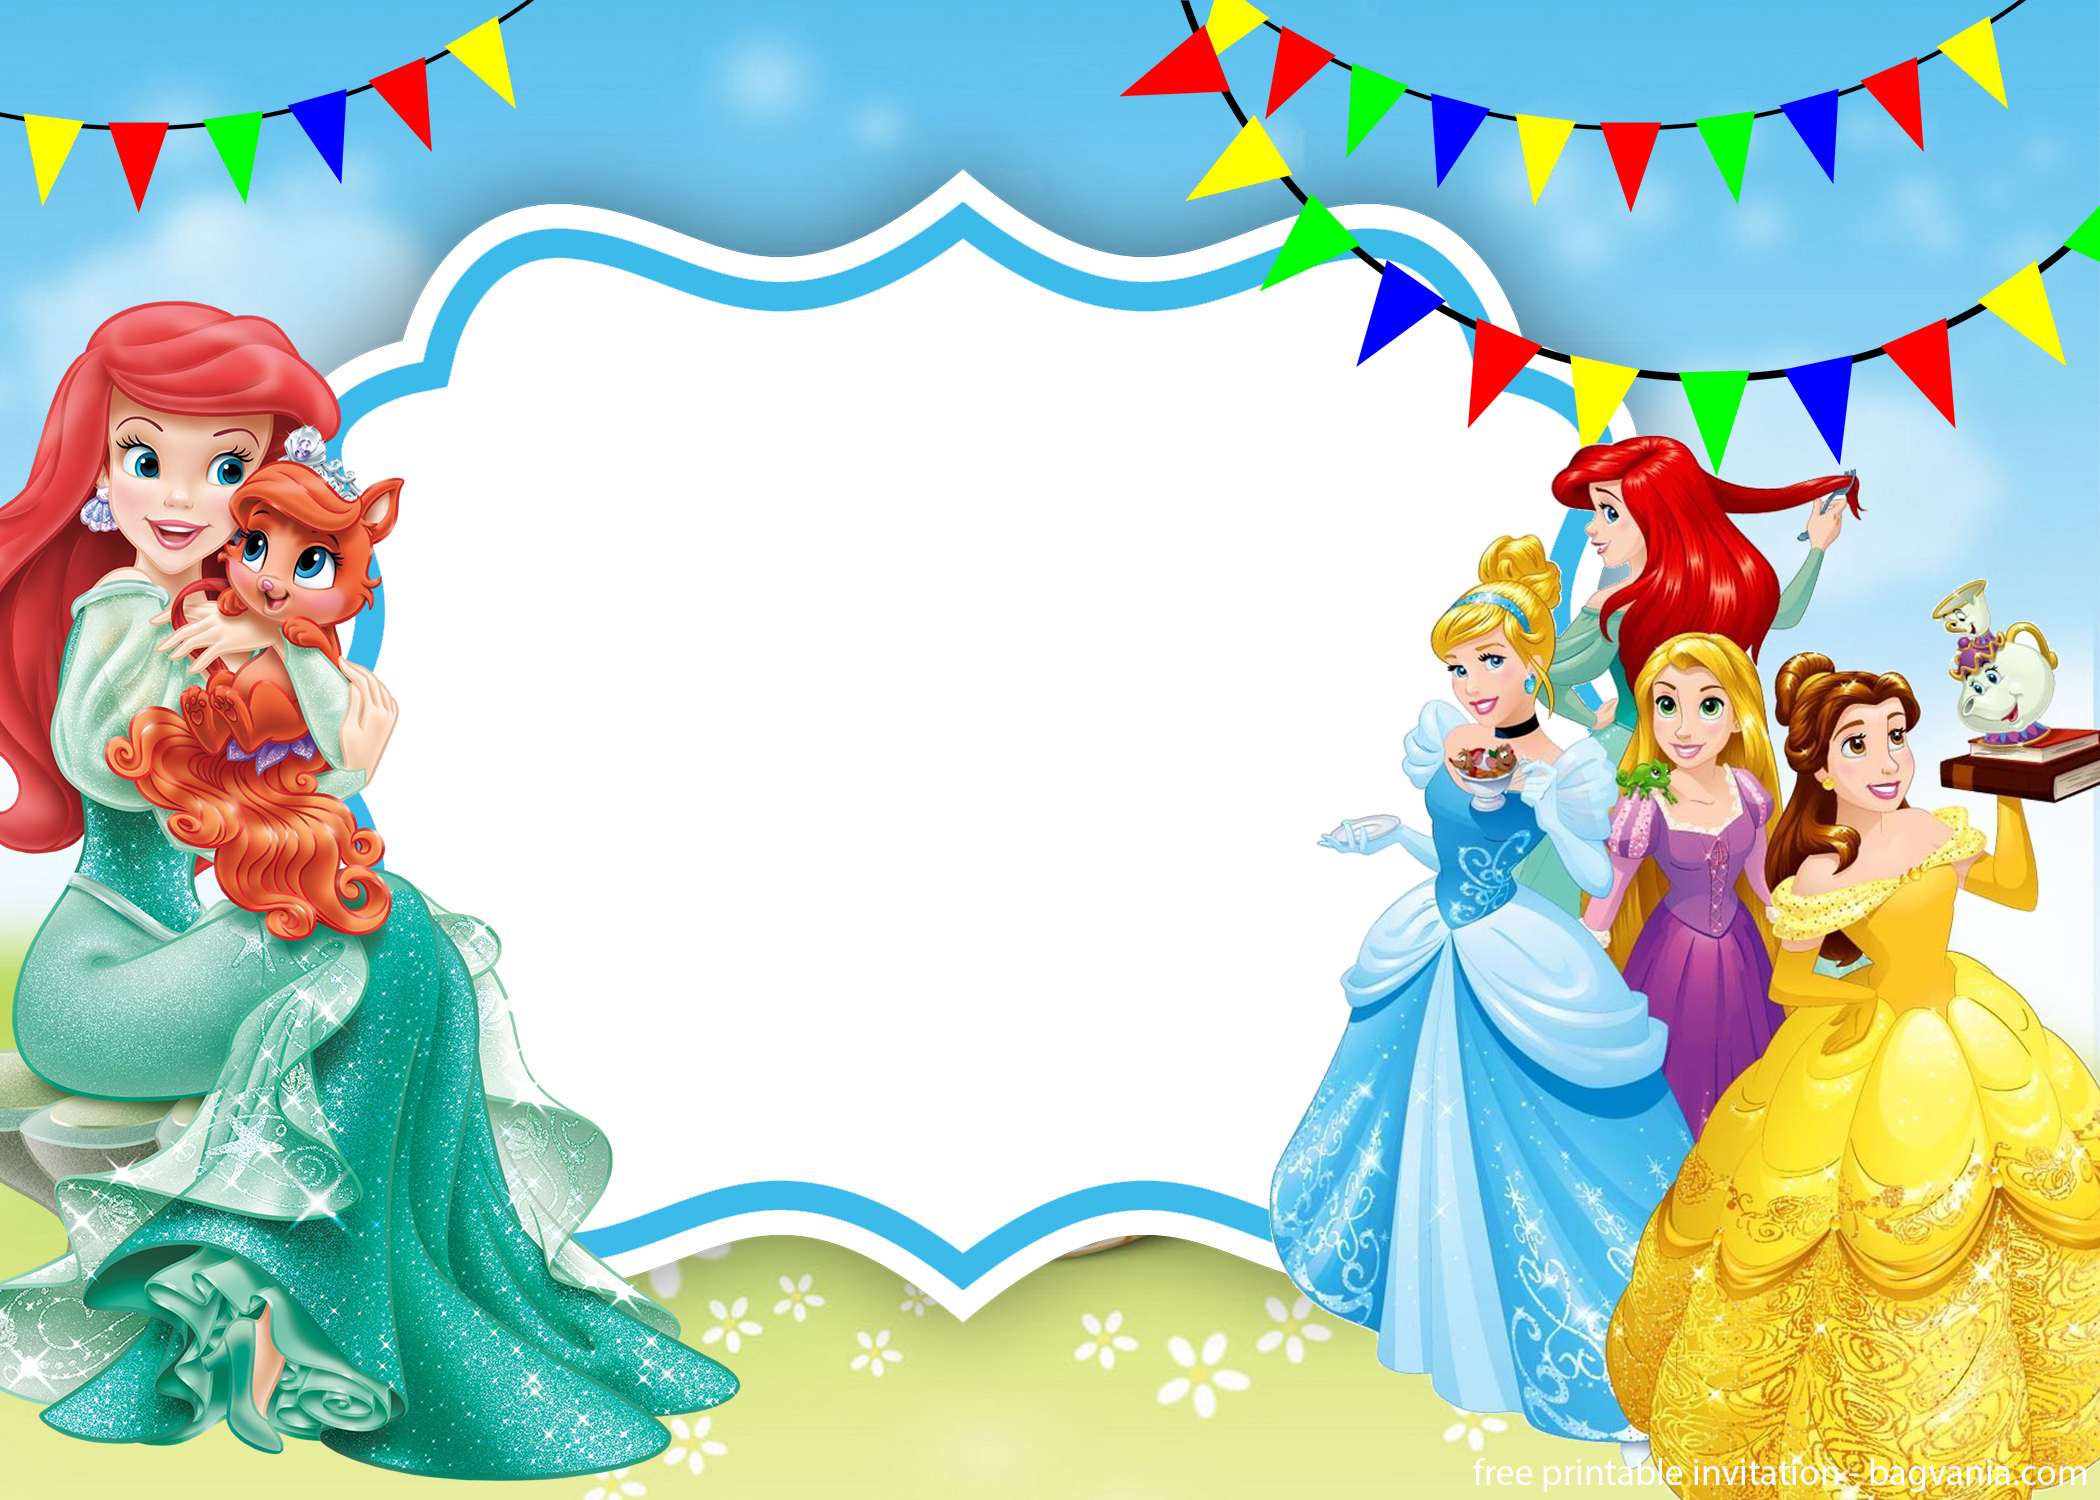 FREE Printable Disney Princessess invitation template FREE Printable